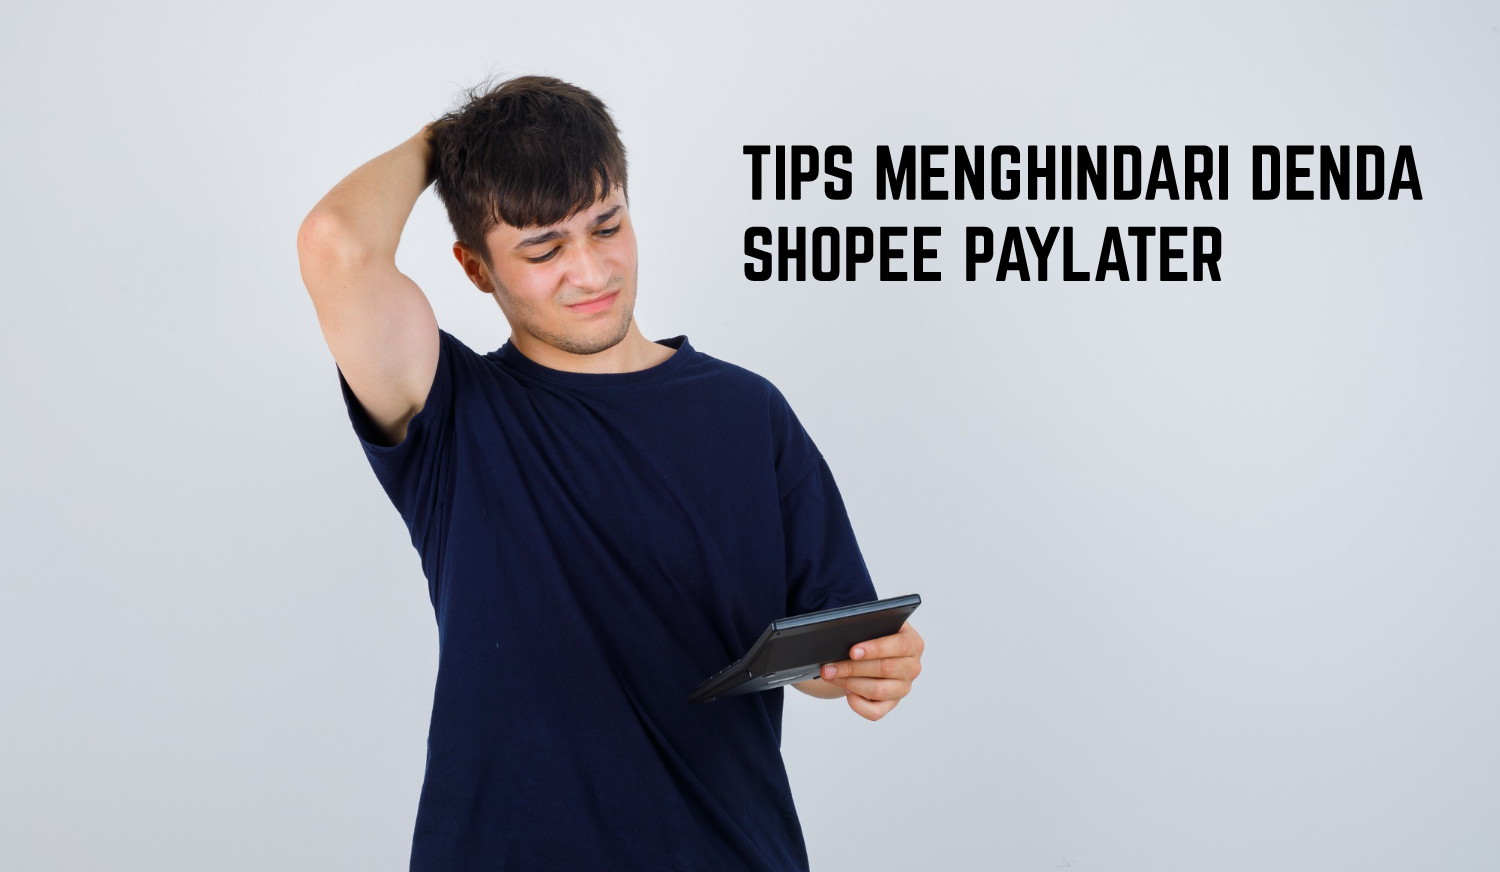 Tips Menghindari Denda Akibat Tidak Bayar Shopee Paylayter, Kamu Harus Paham!